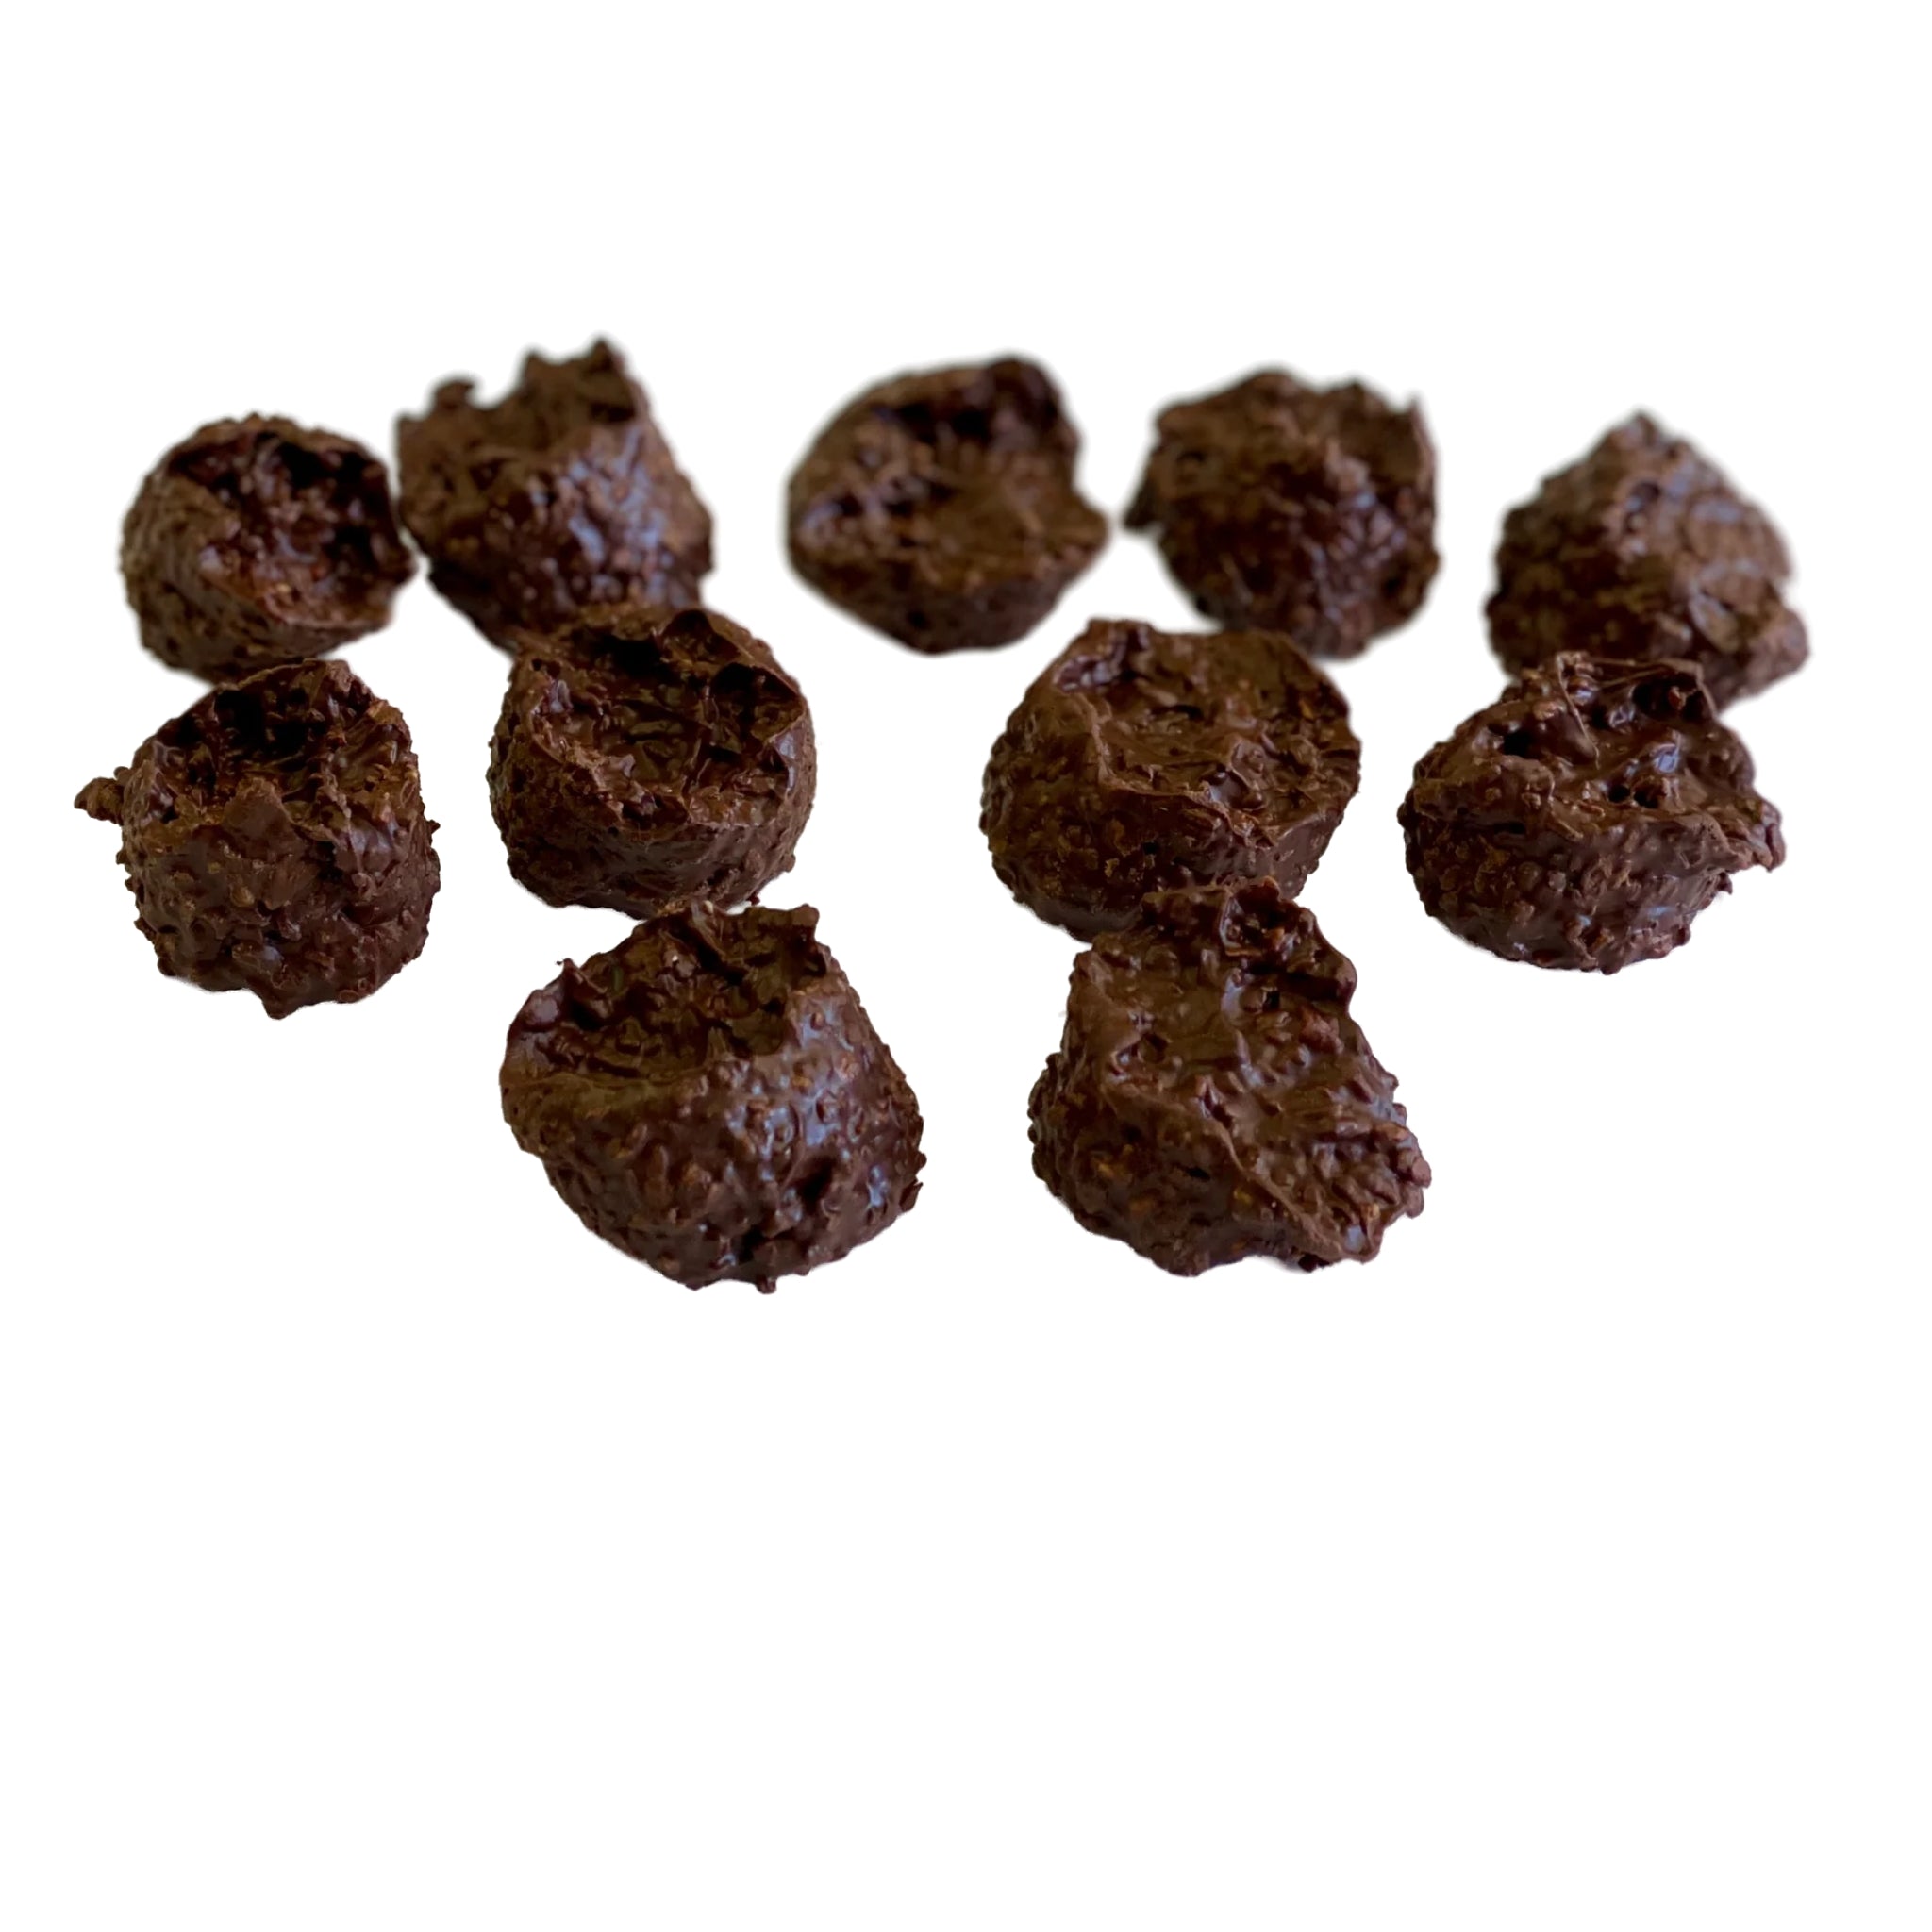 Small quarter size dark chocolate rounds 